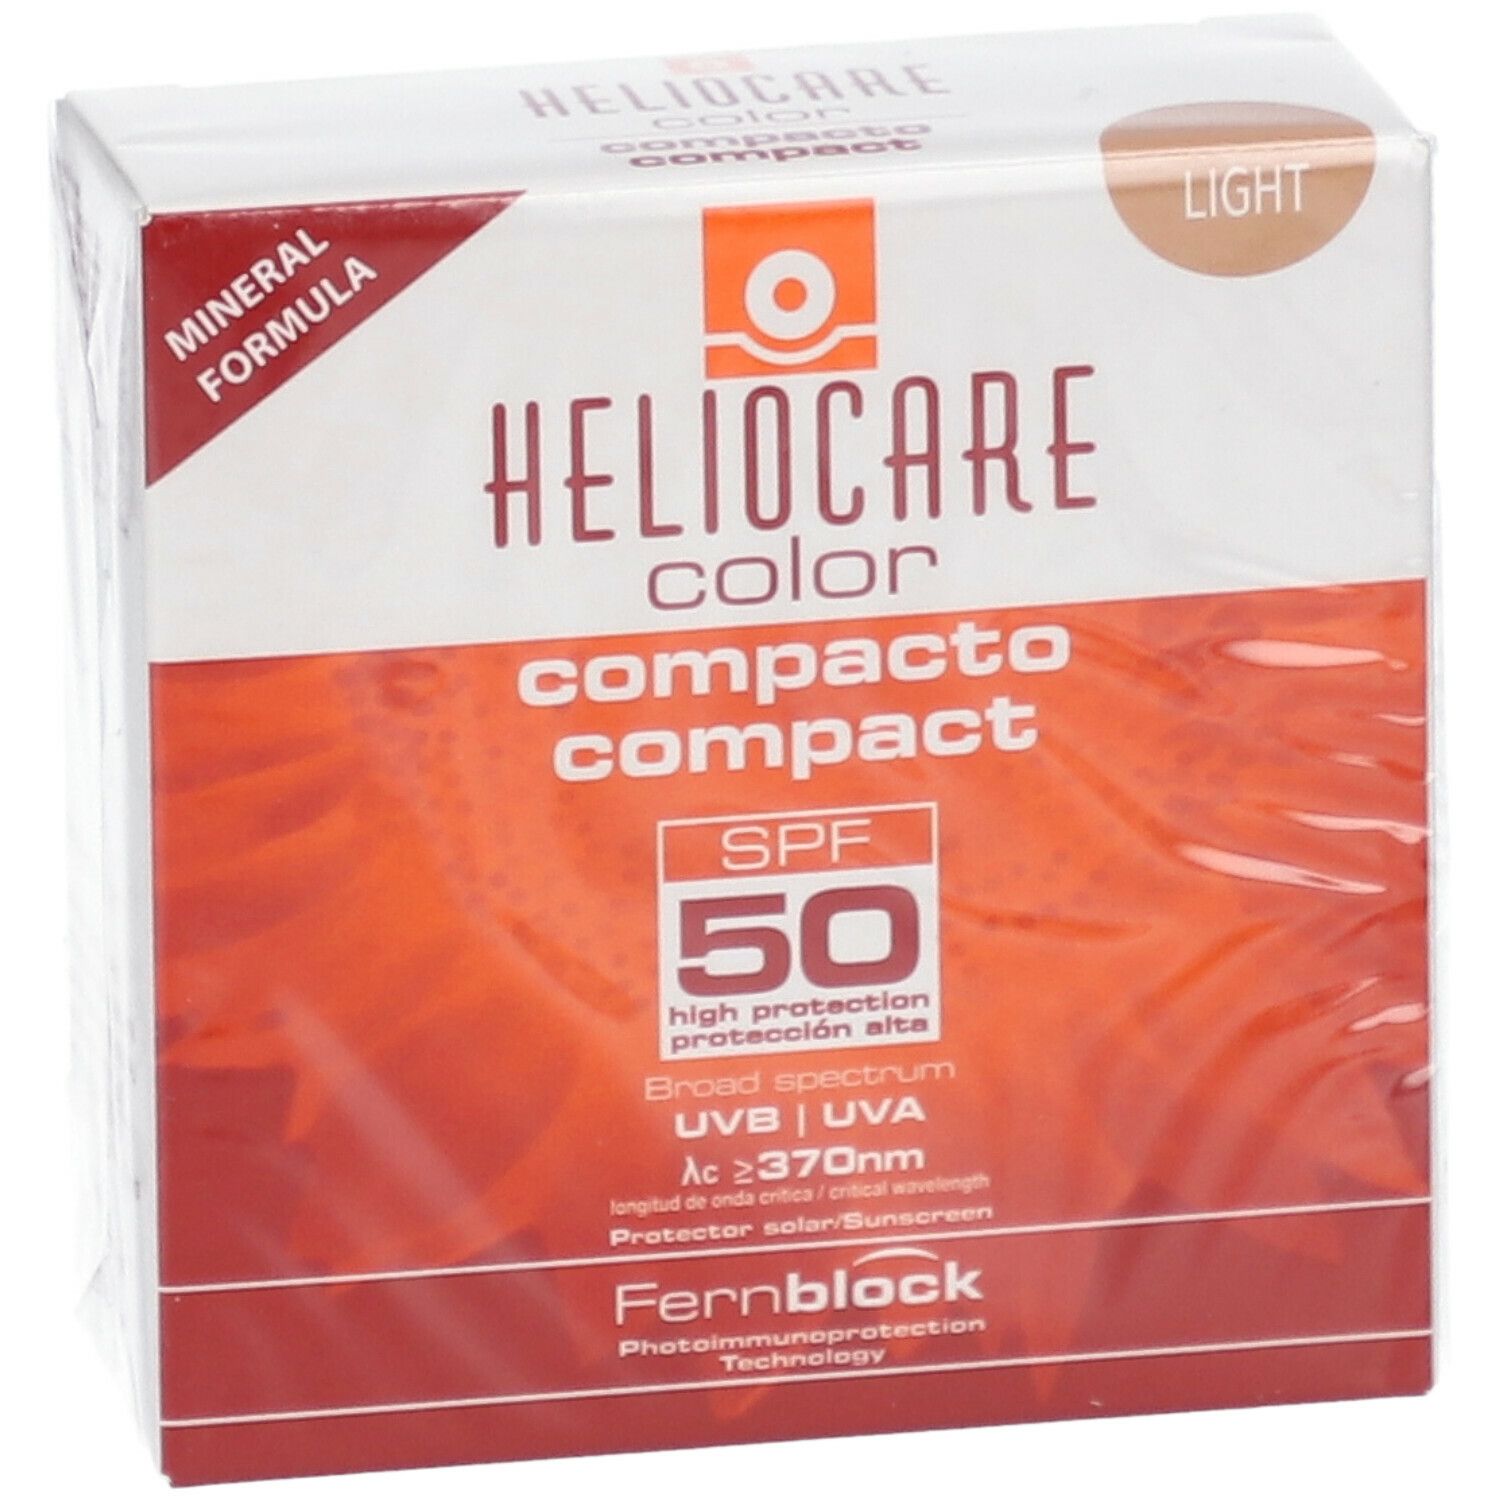 Heliocare Compact SPF50 Light